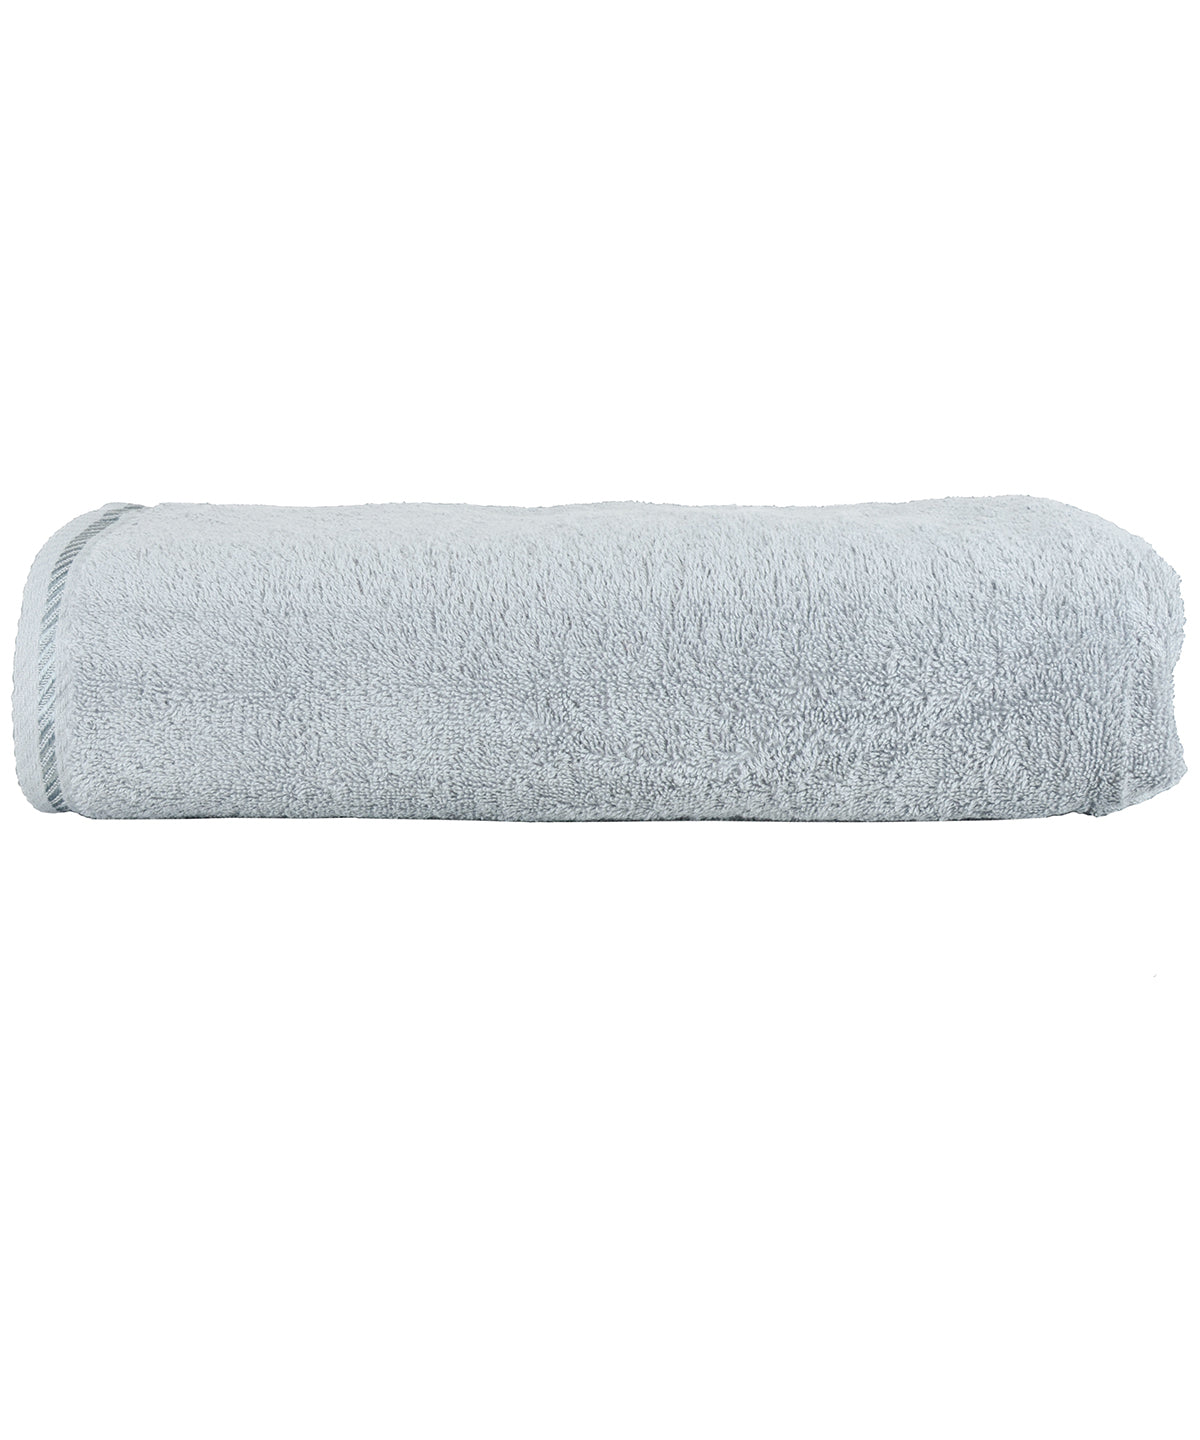 Personalised Towels - Light Grey A&R Towels ARTG® Big towel